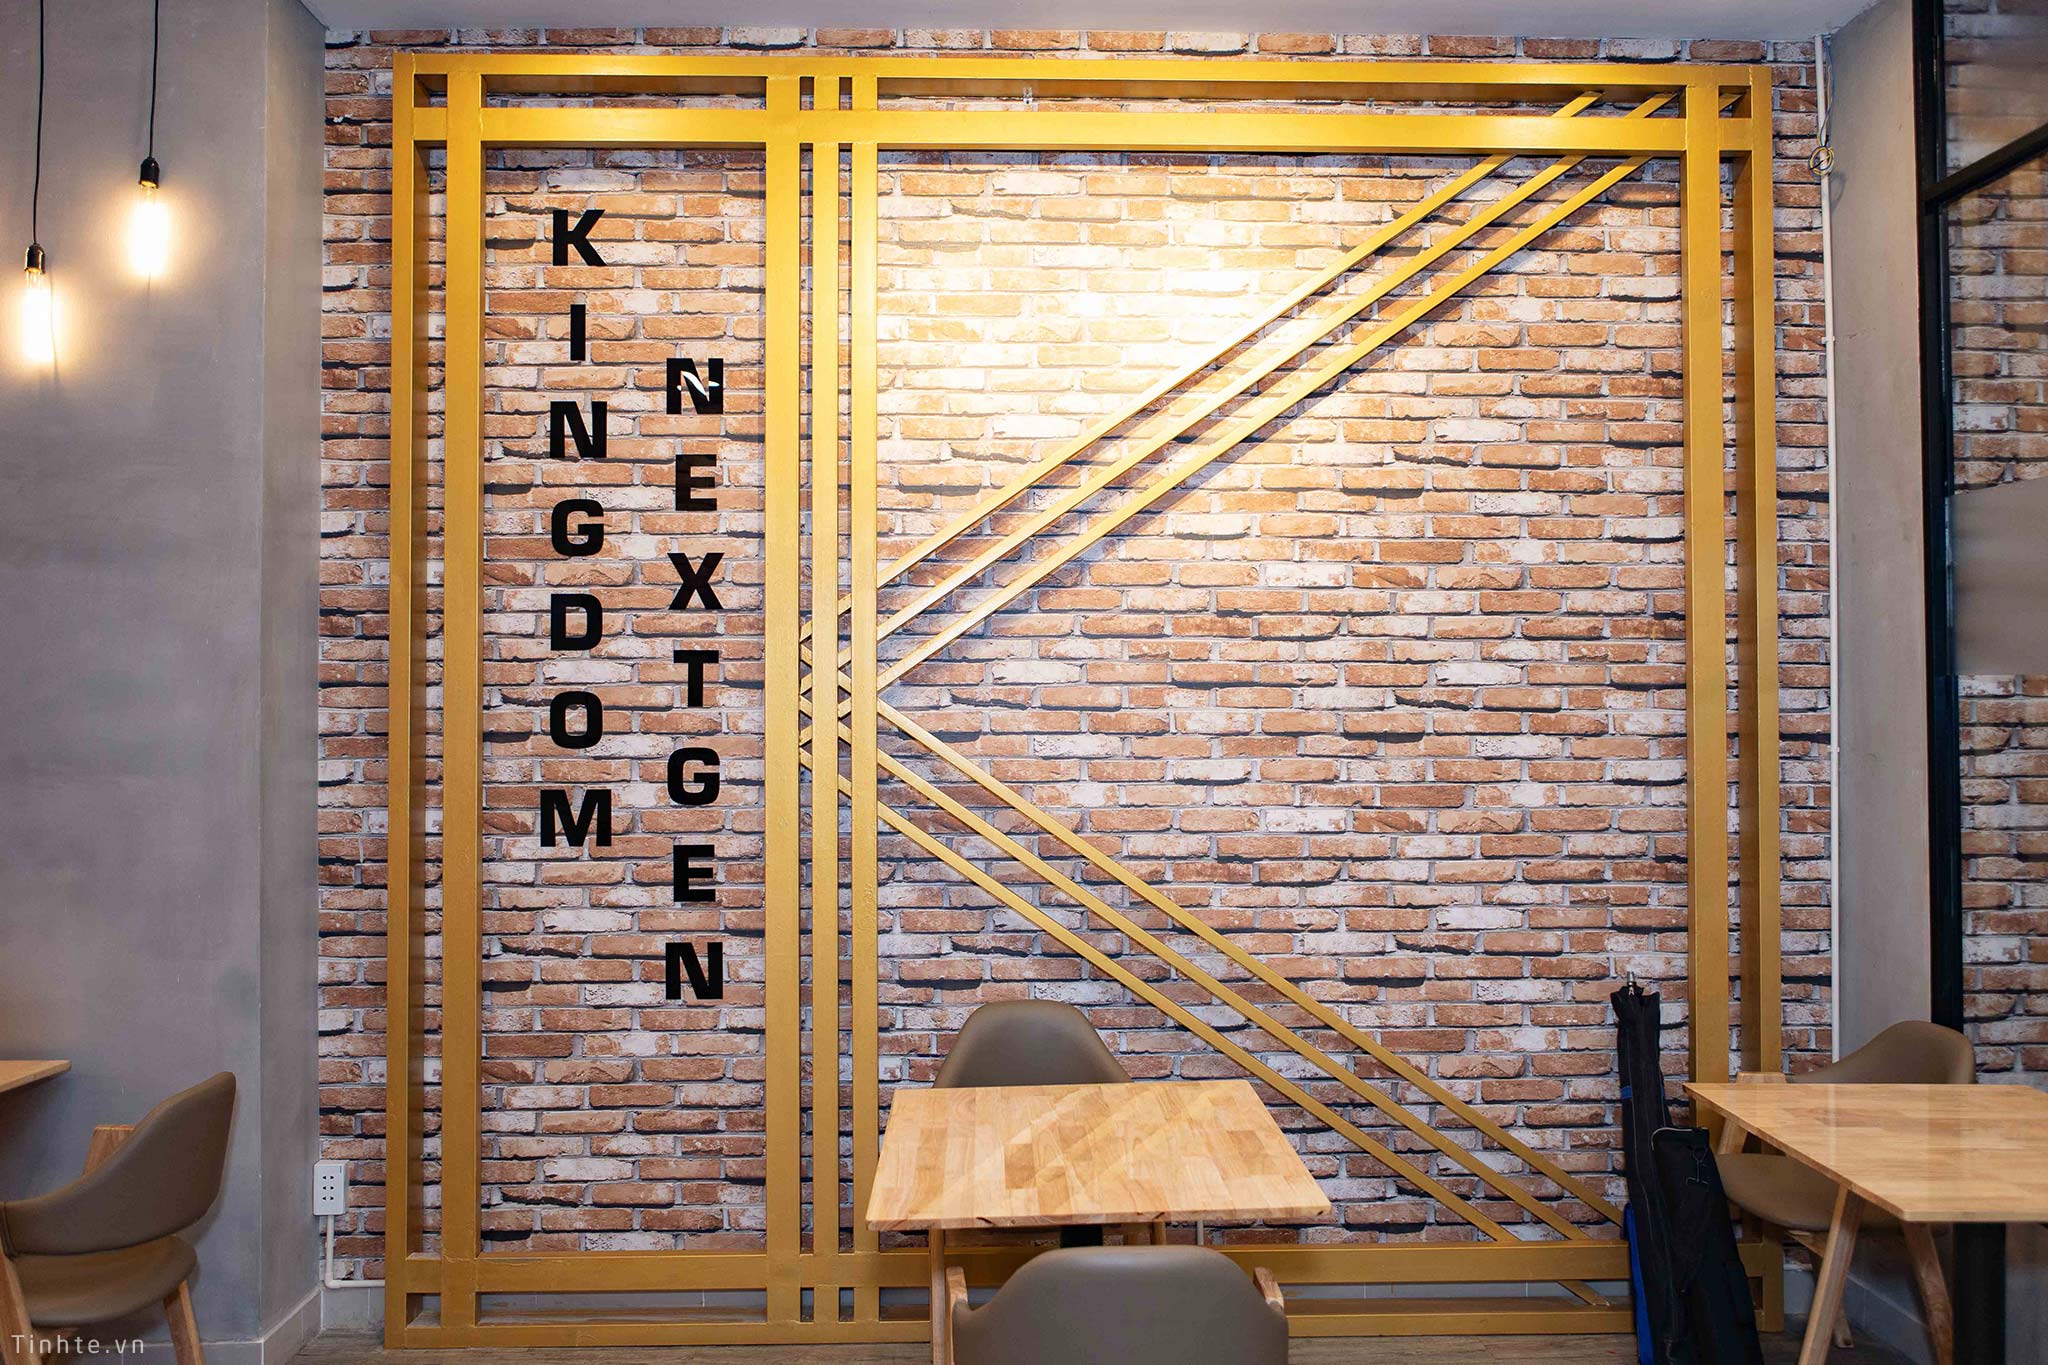 Kingdom_Next_Gen_cafe2.jpg